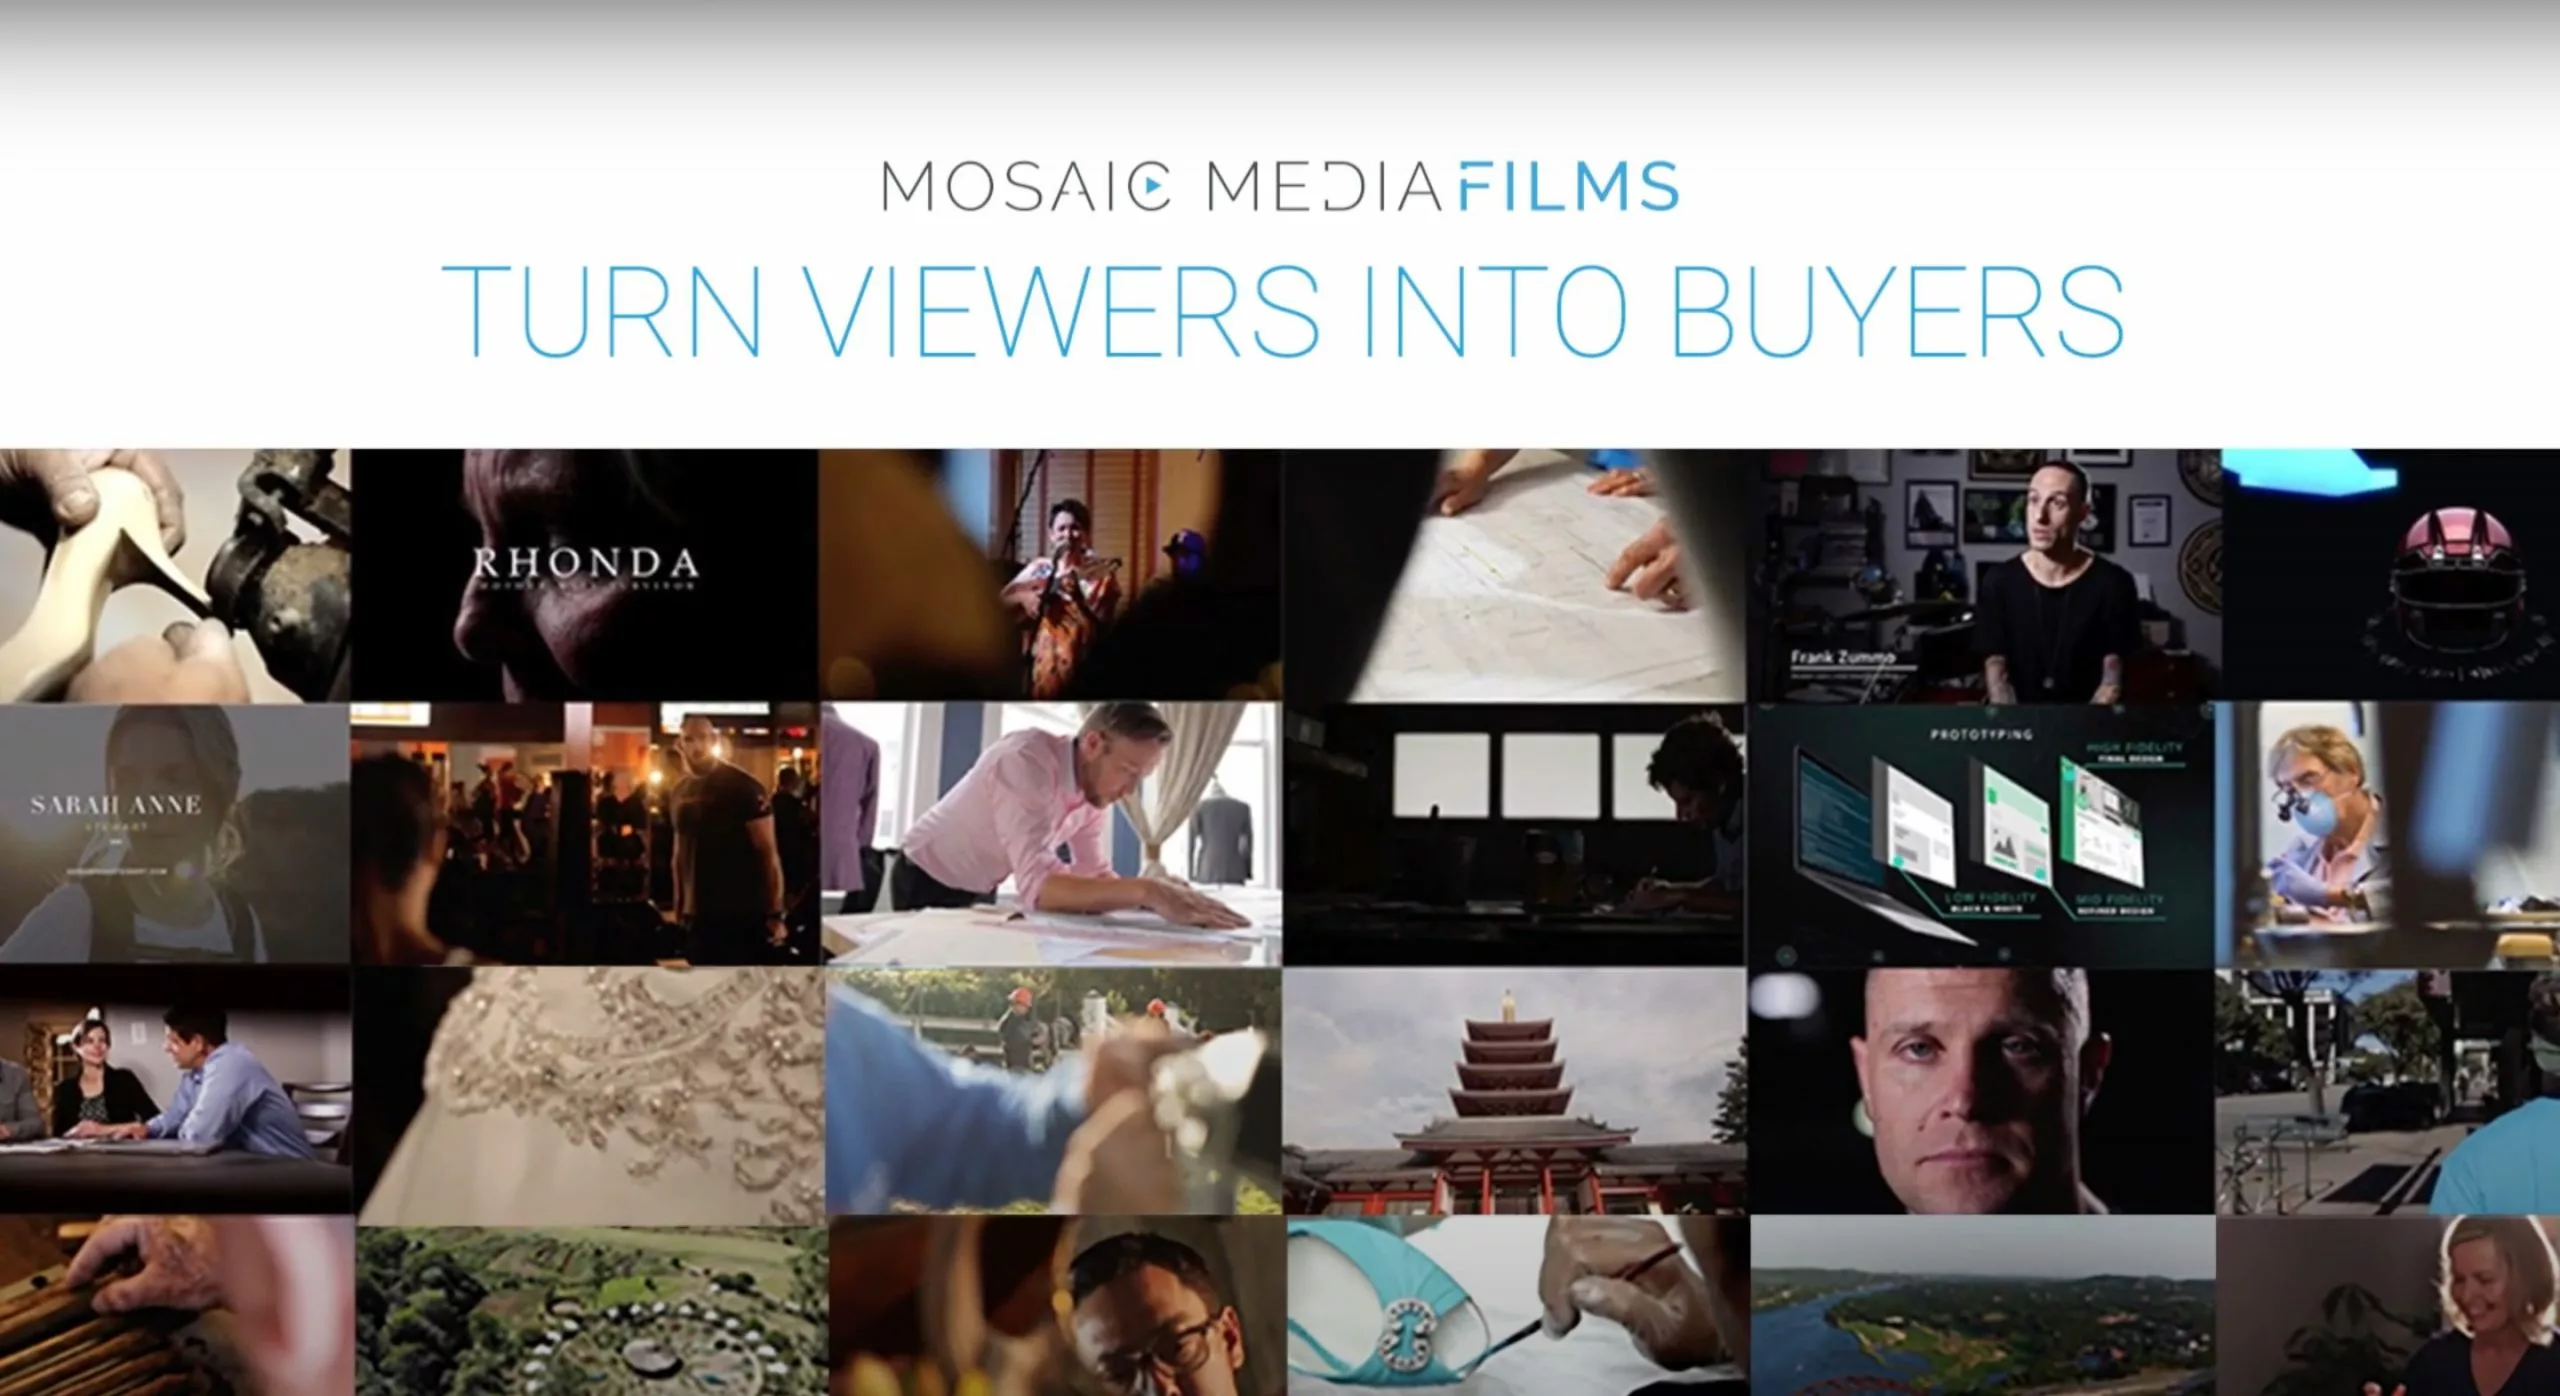 Video Company Austin Mosaic Media Films Blog Post Video Marketing Tips scaled 1 jpg Mosaic Media Films